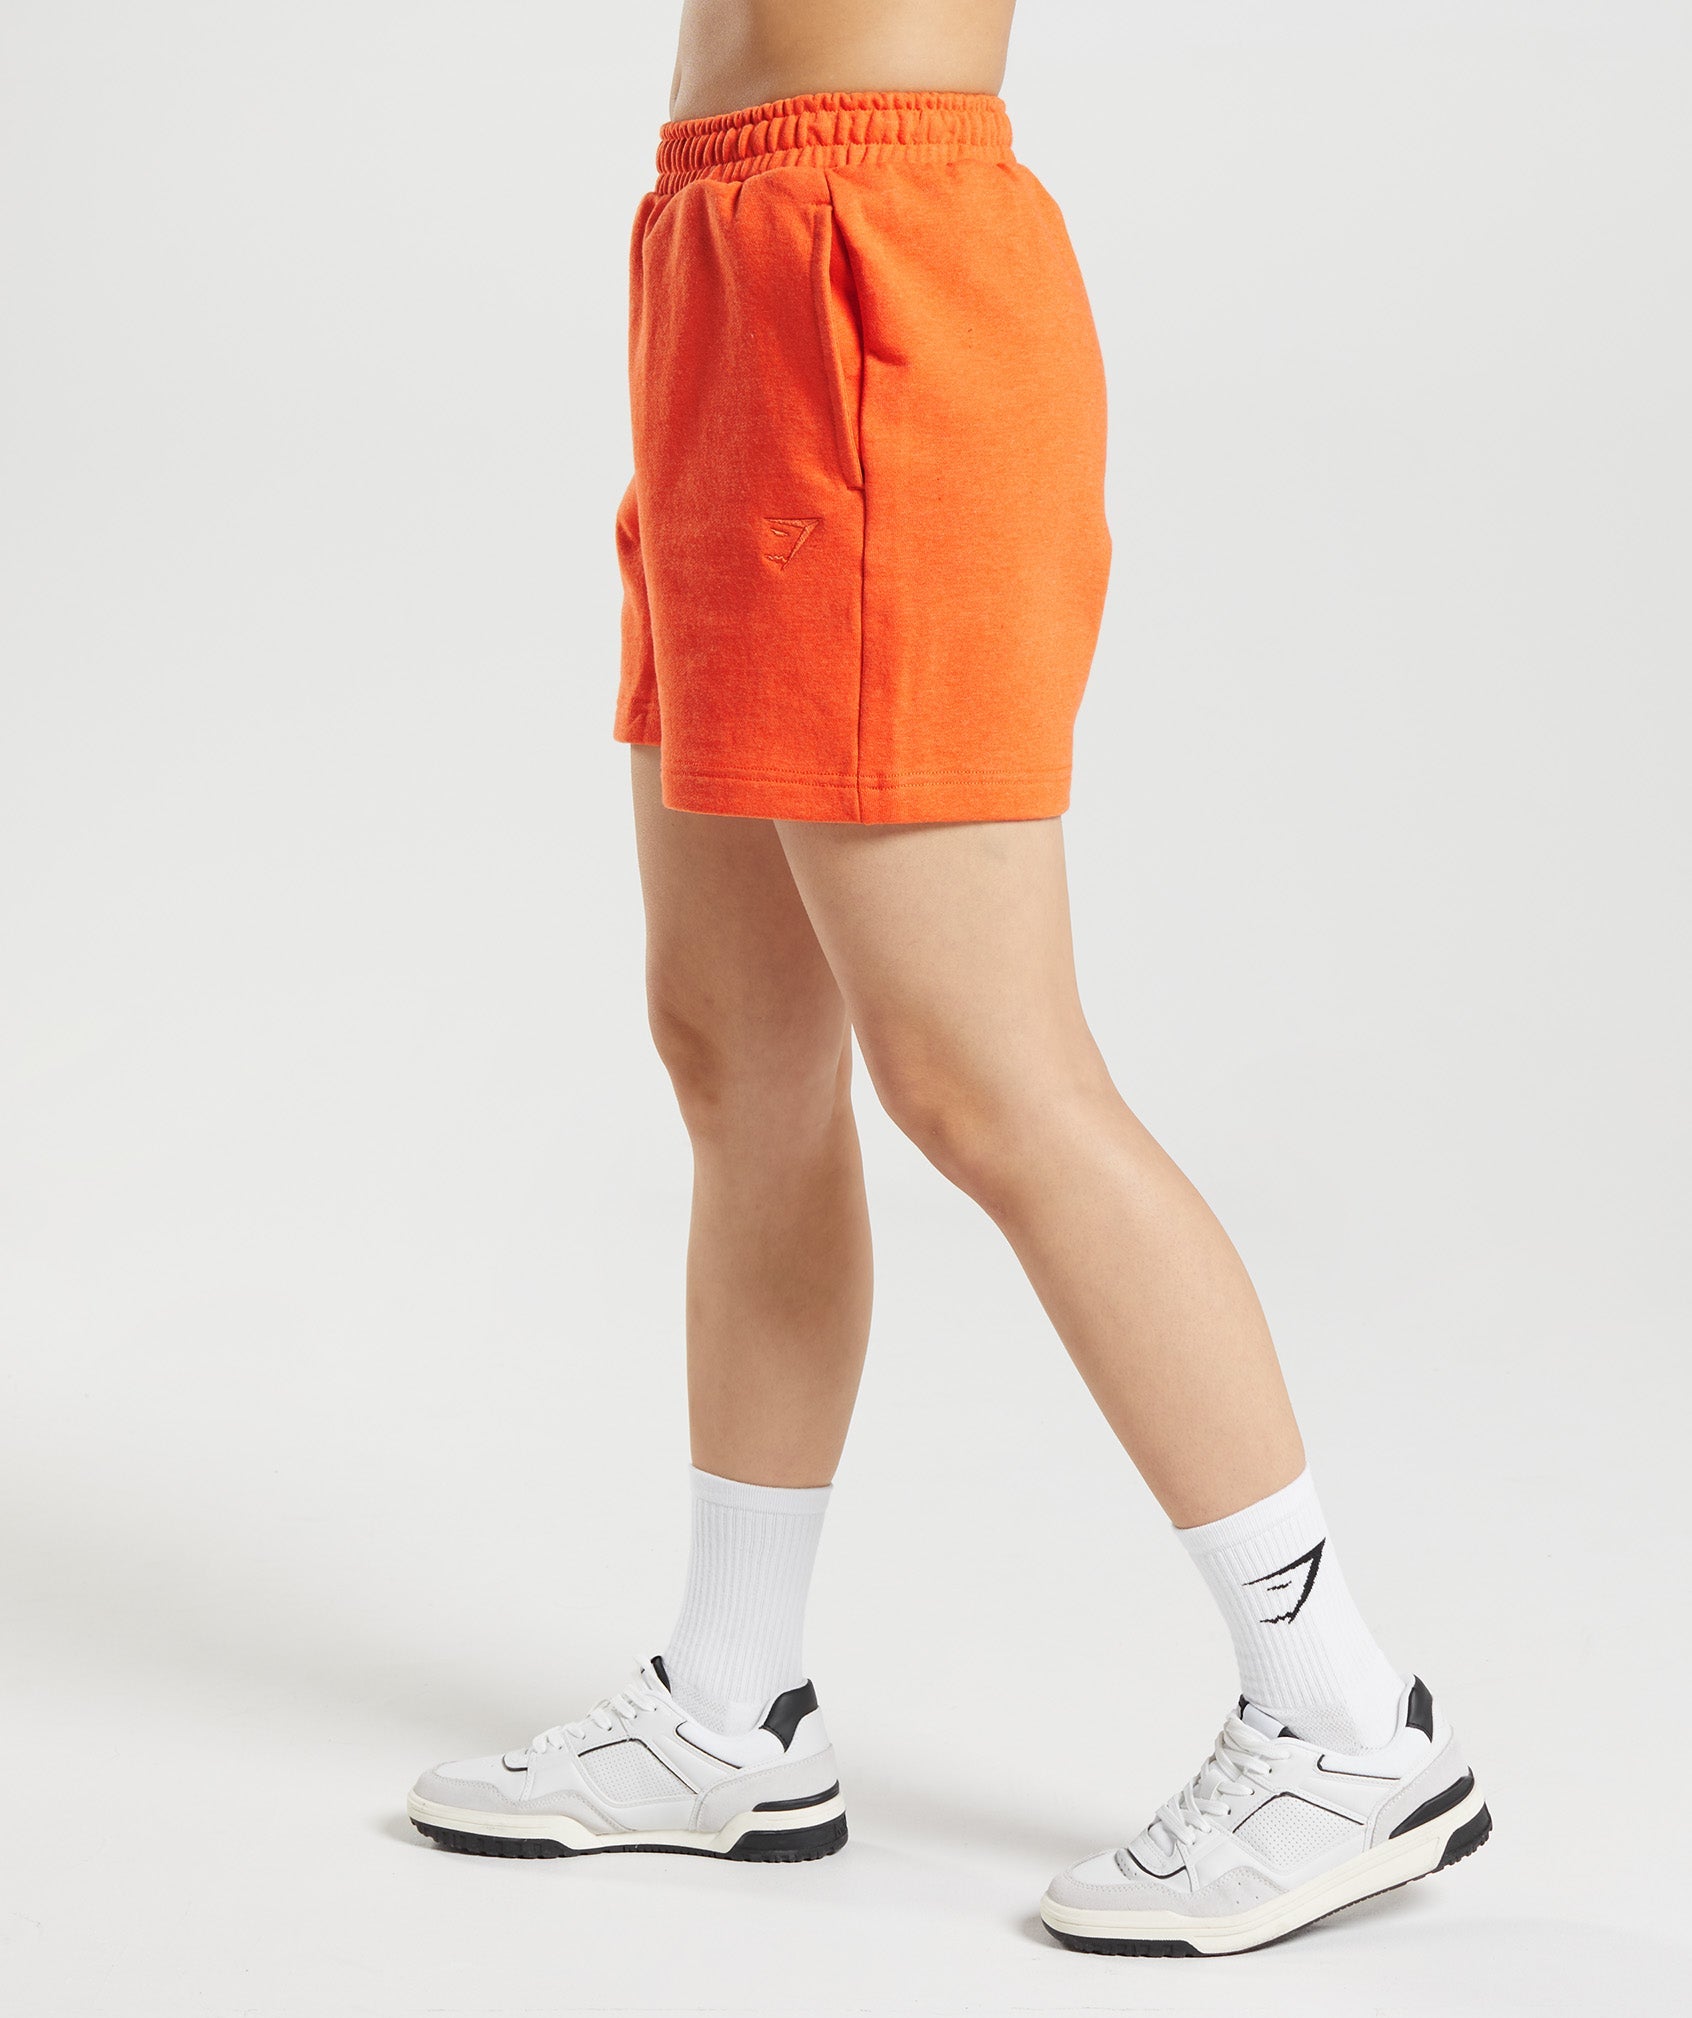 Rest Day Sweats Shorts in Blaze Orange Marl - view 3